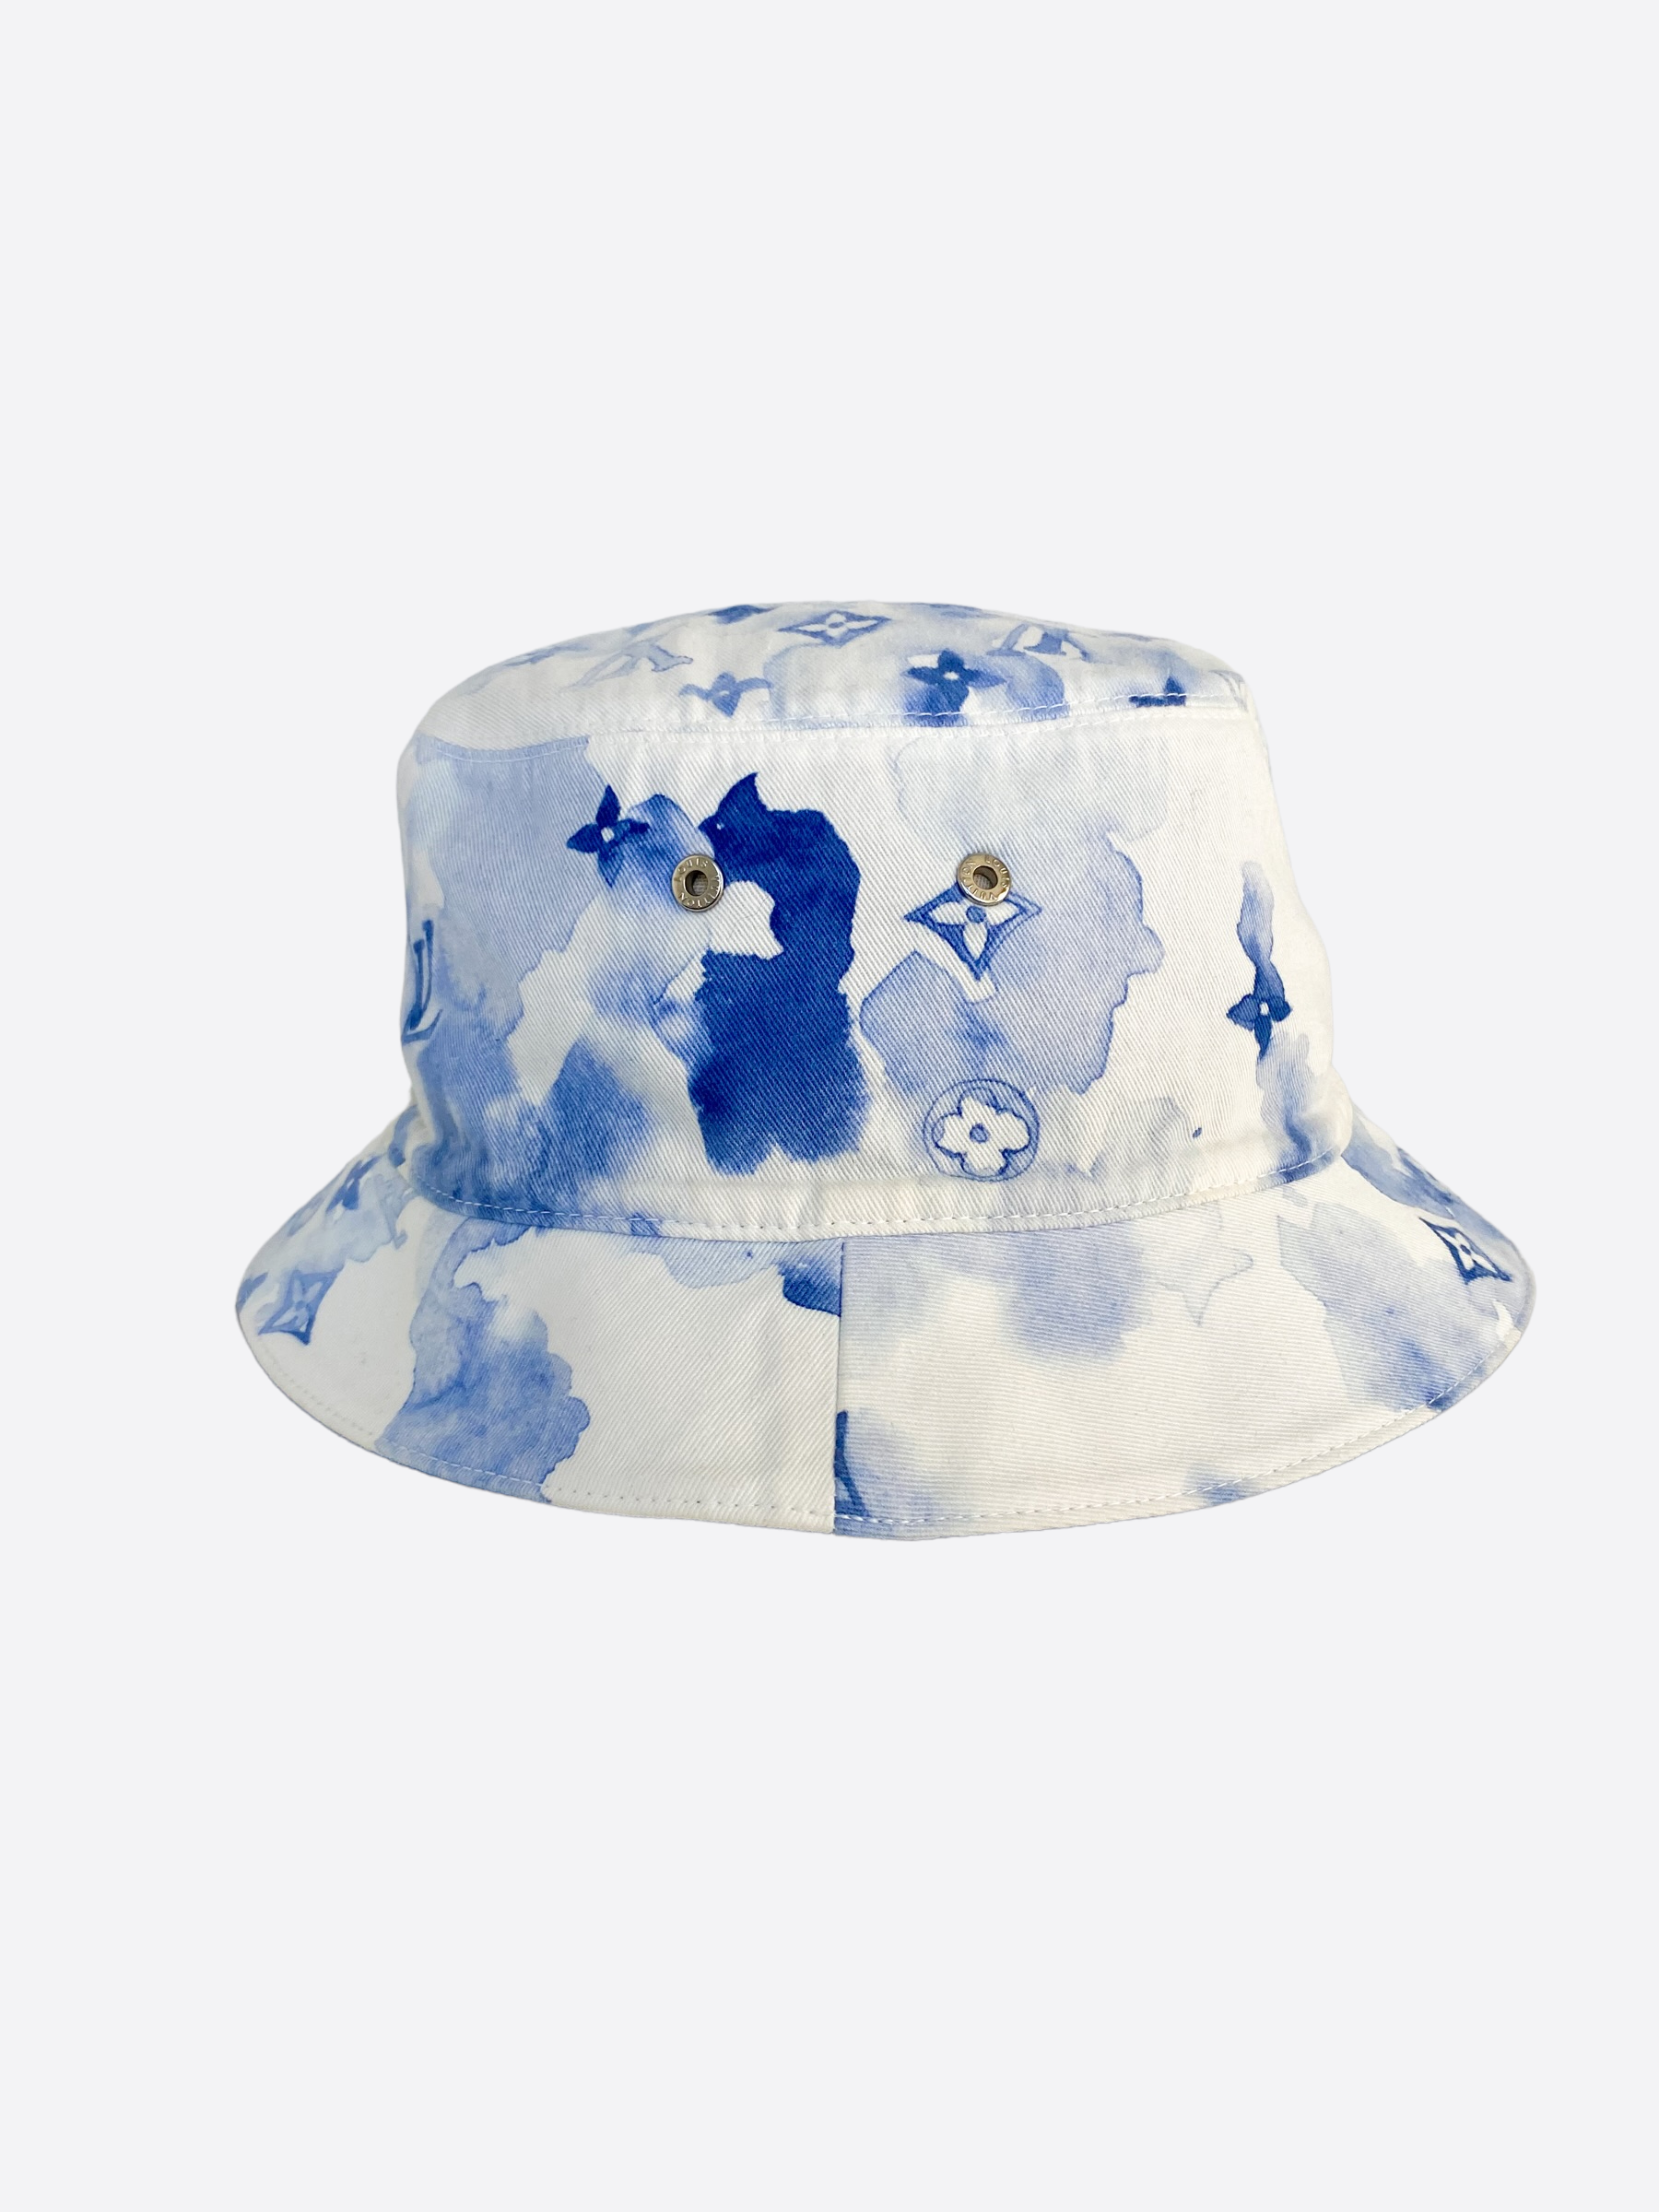 lv bucket hat price